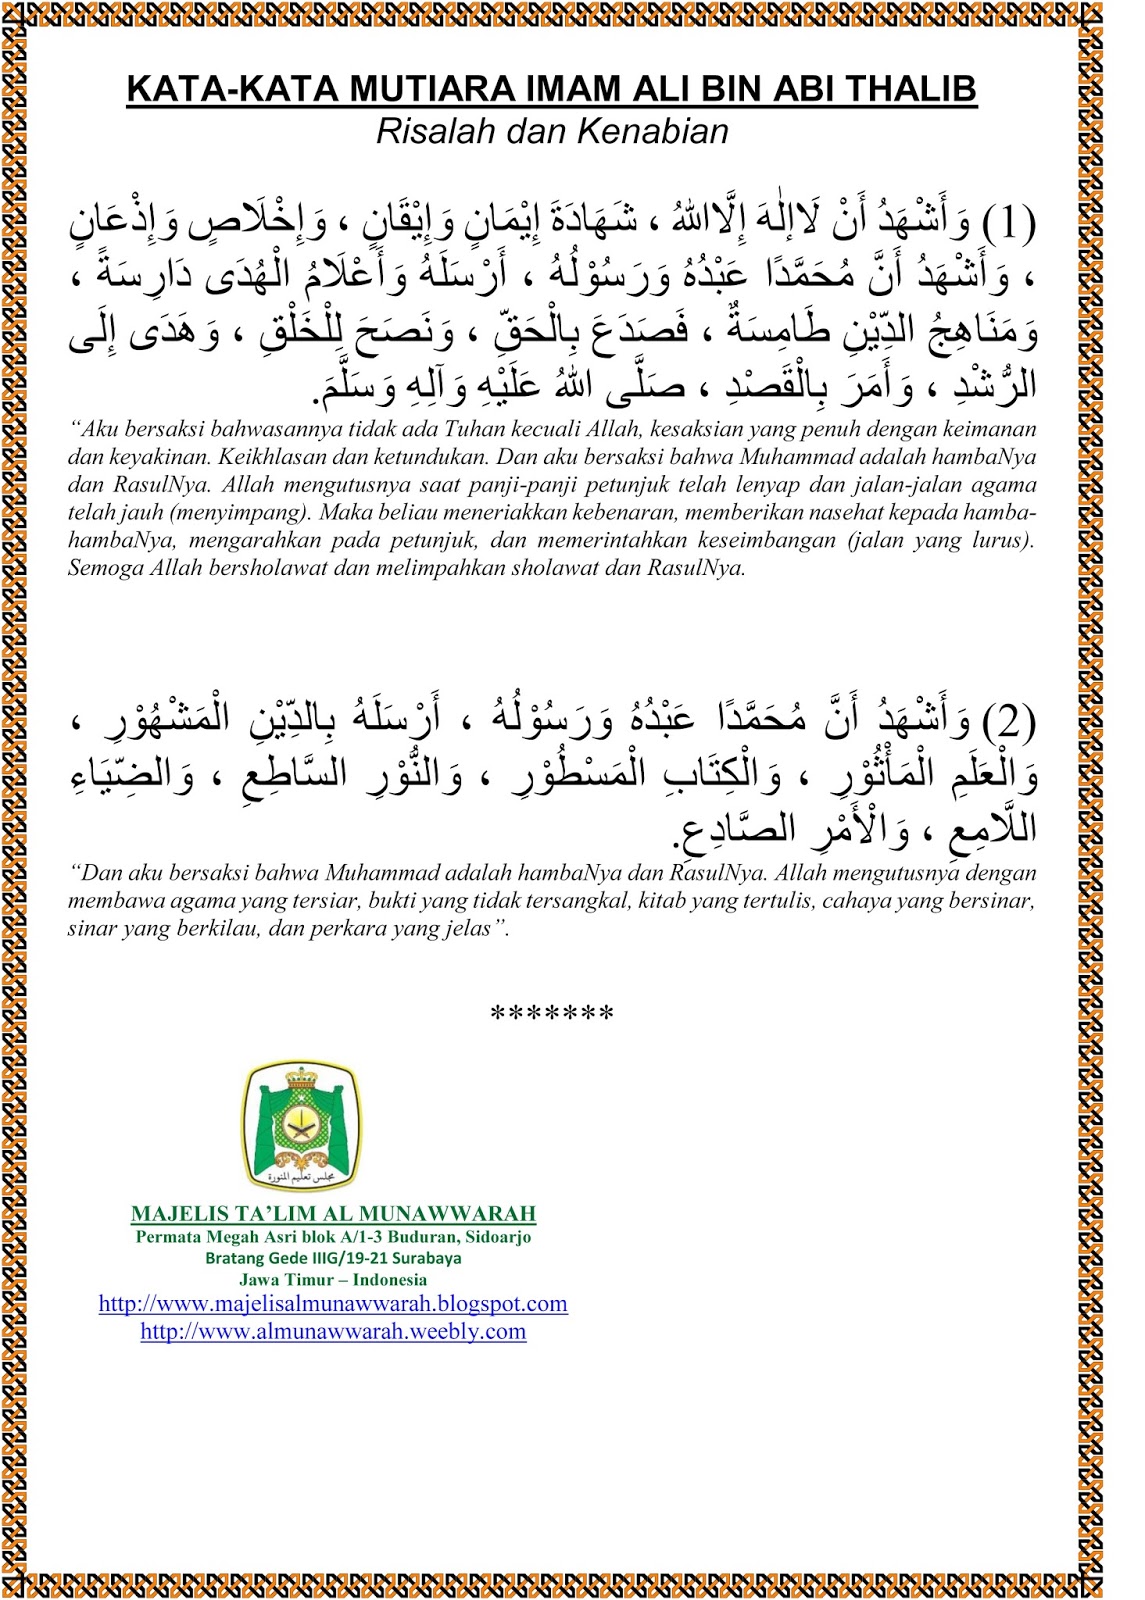 Risalah Dan Kenabian Kata Kata  Mutiara Imam Ali  bin  Abi  